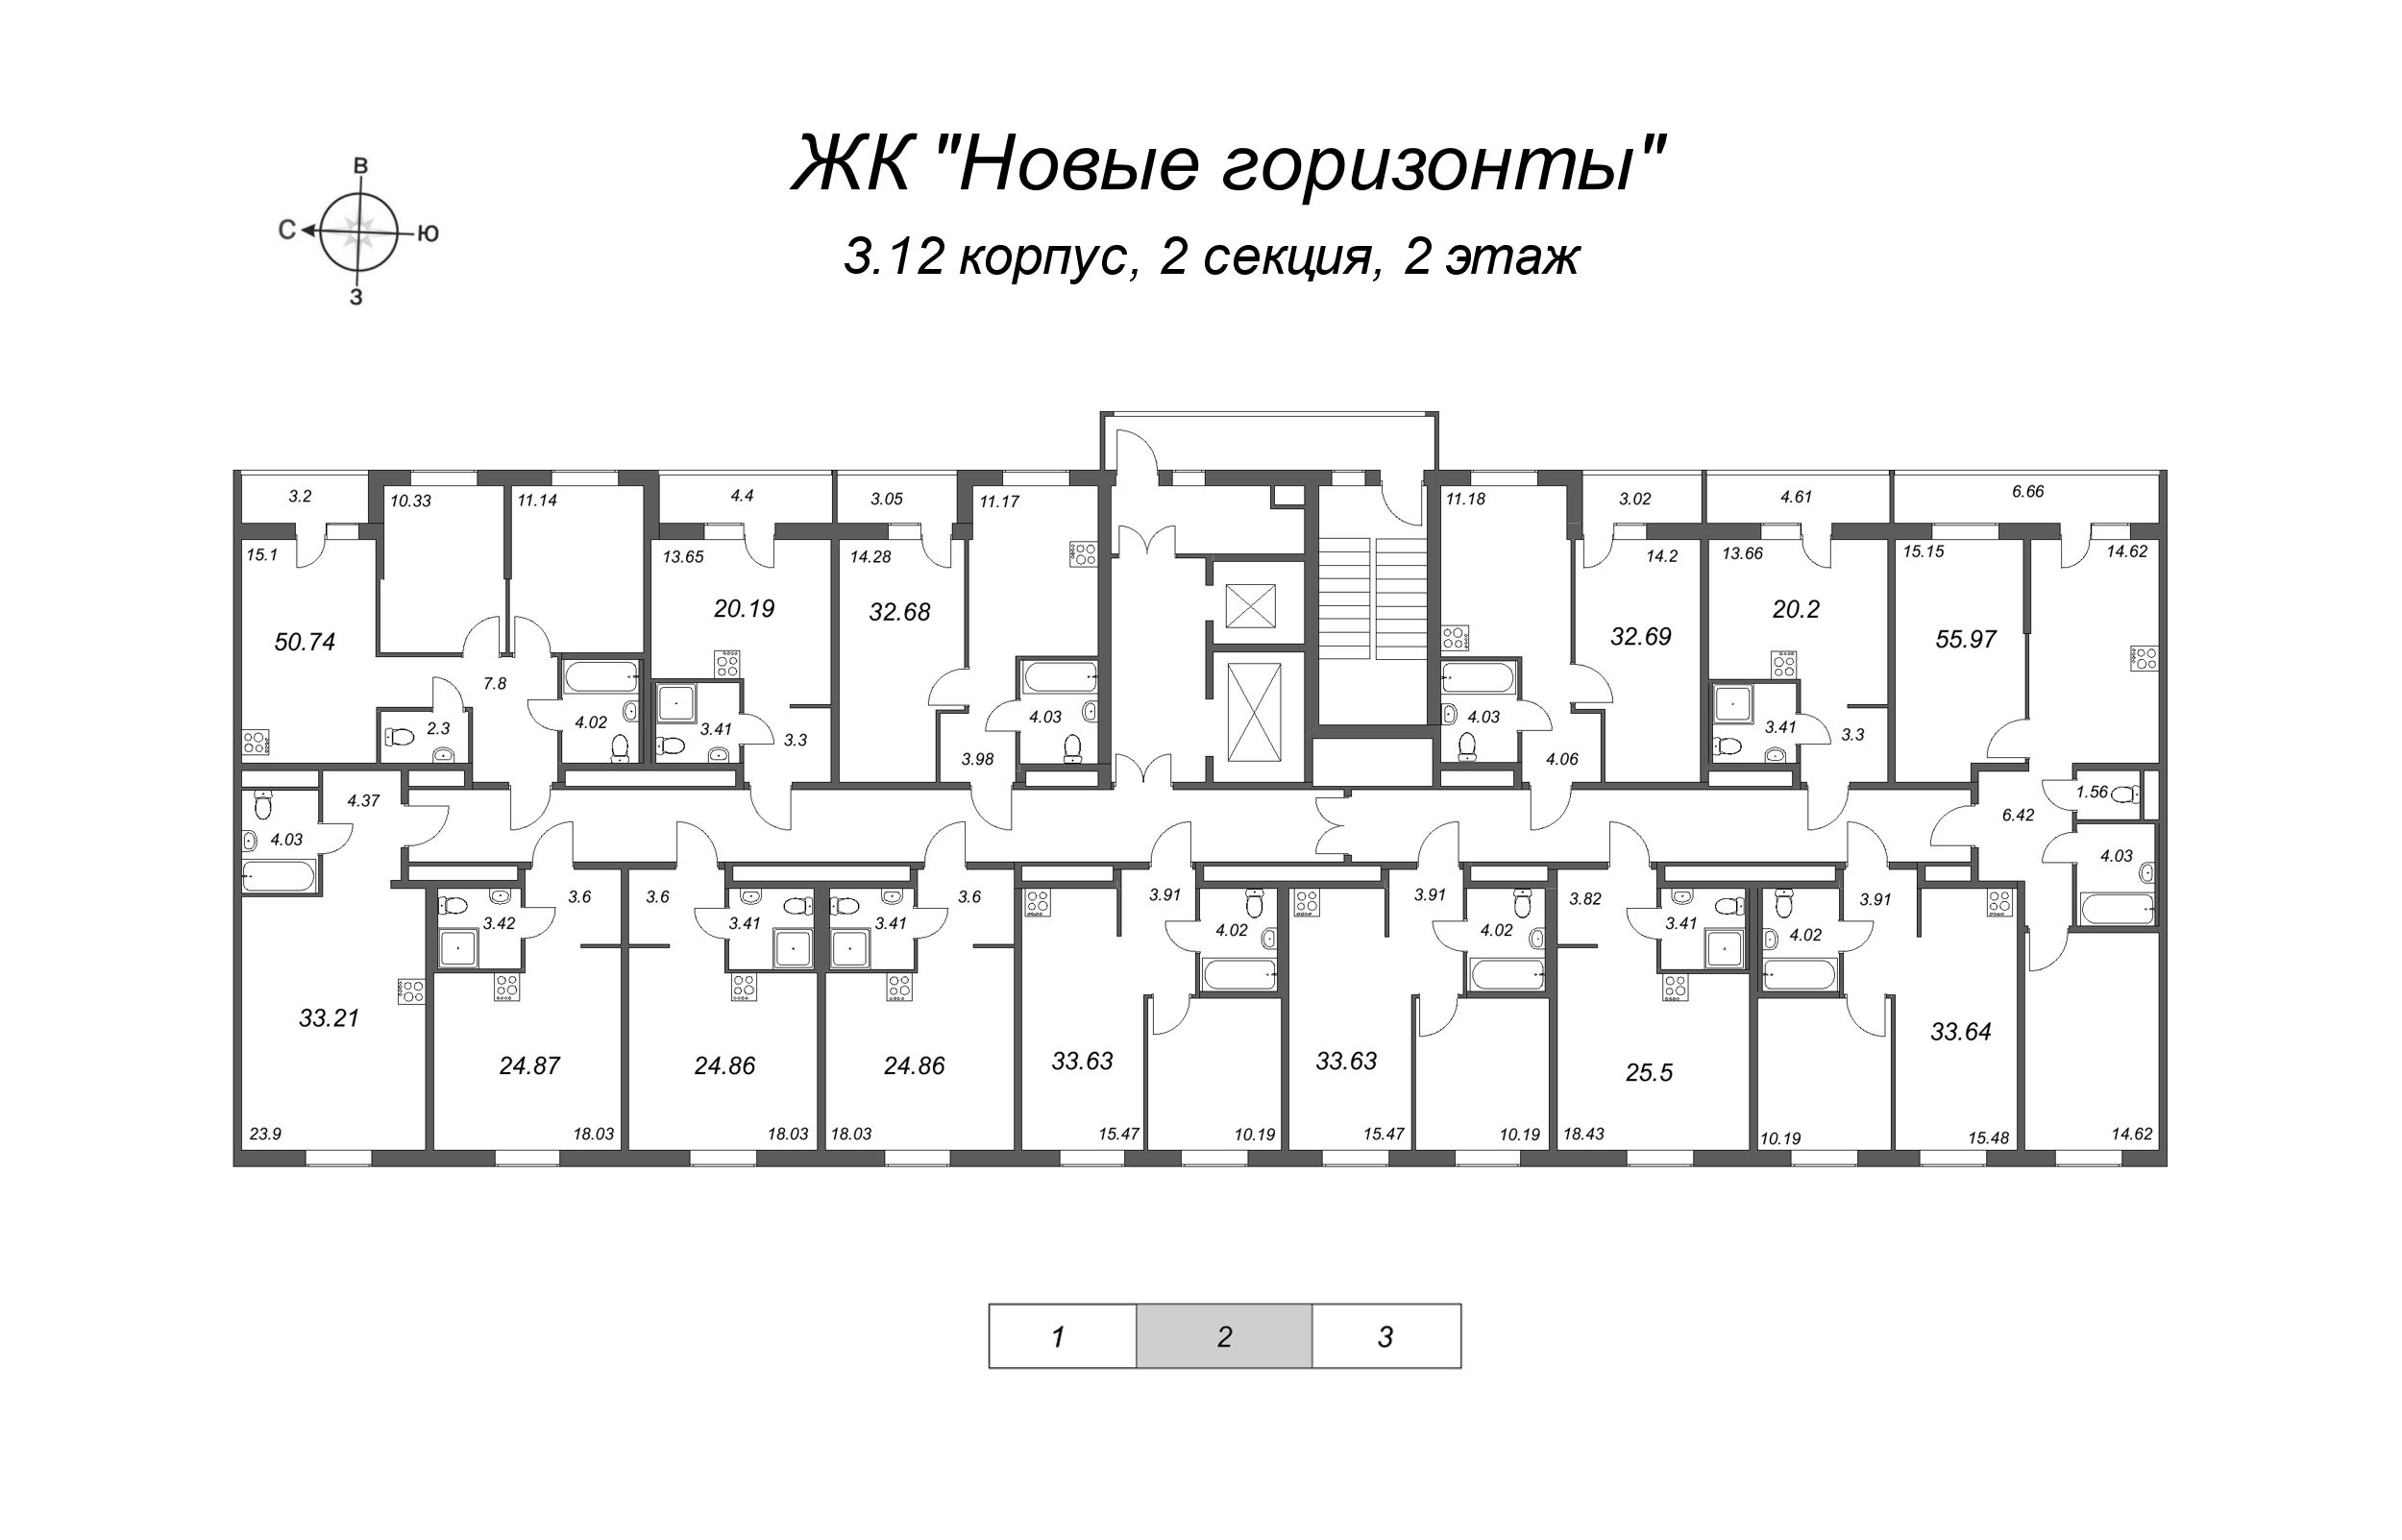 2-комнатная (Евро) квартира, 33.63 м² - планировка этажа